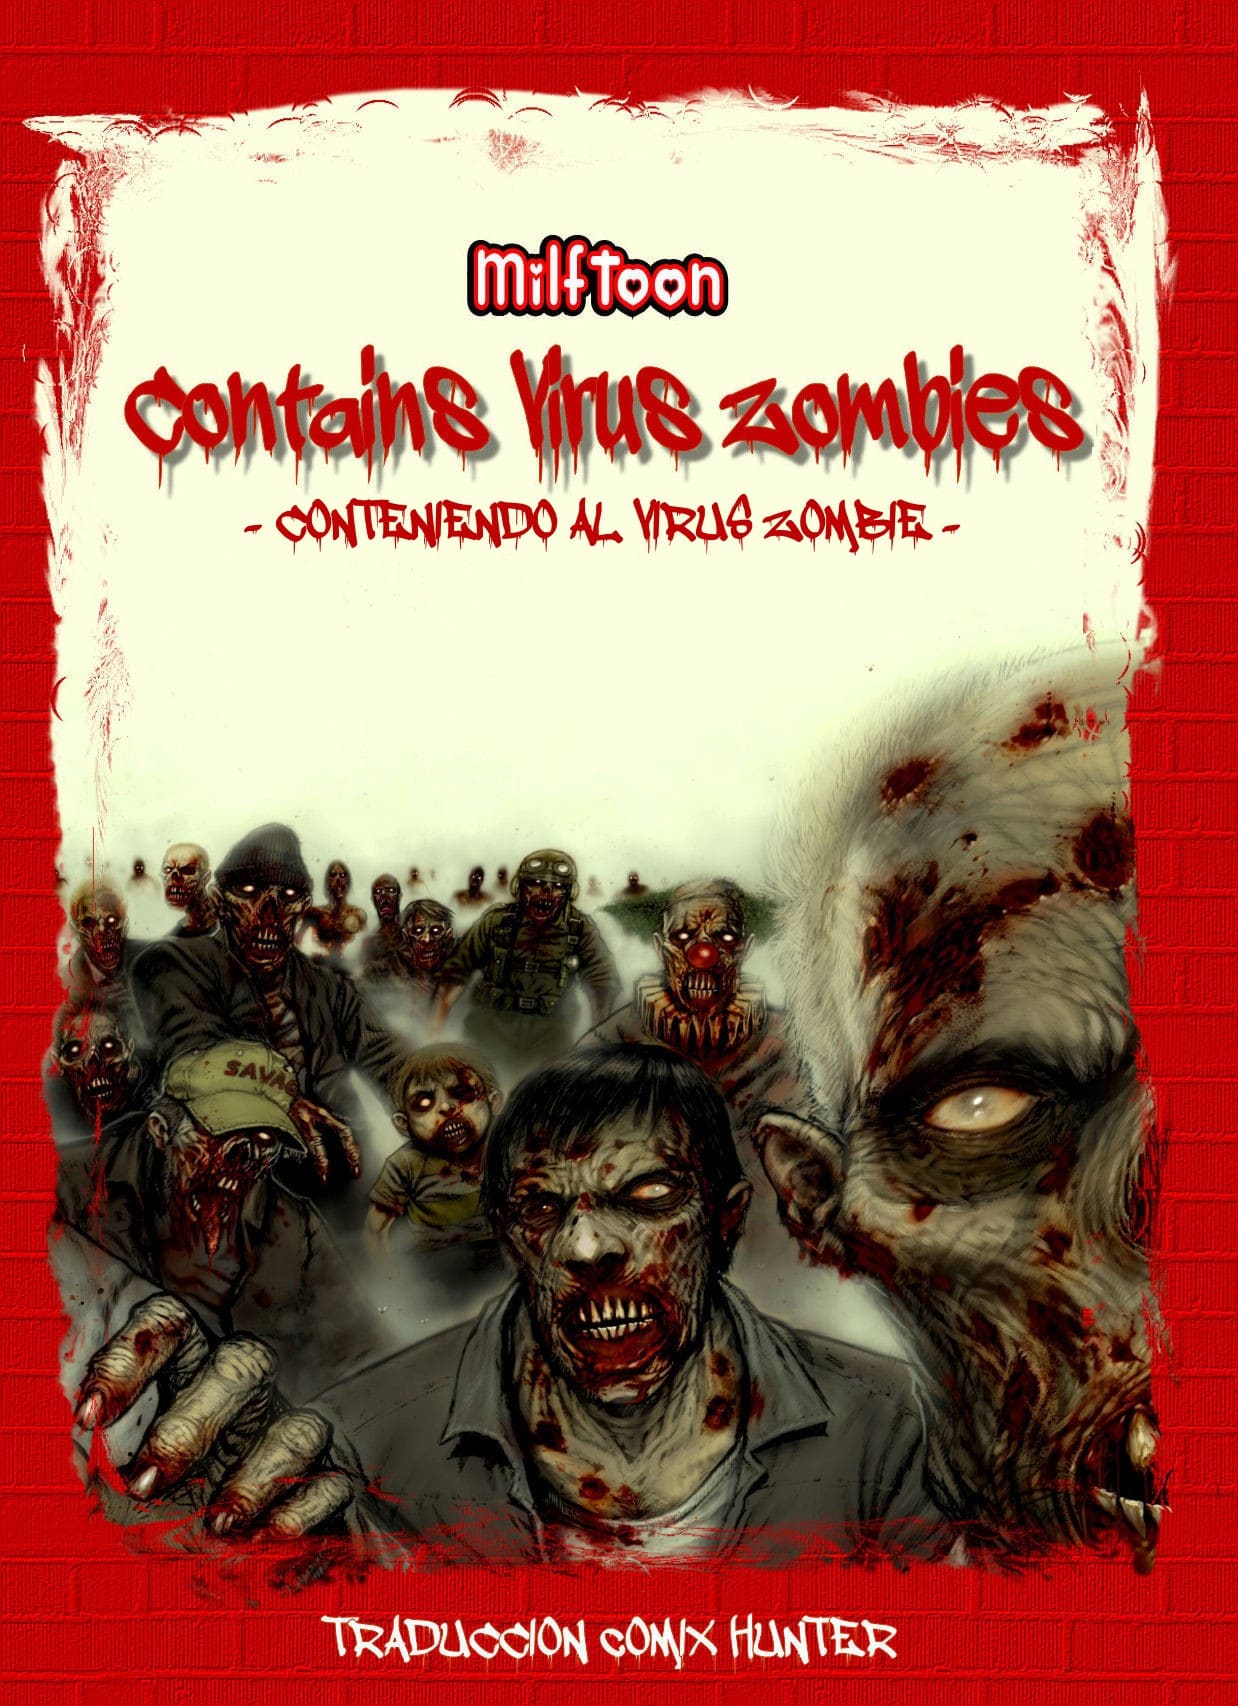 Conteniendo al Virus Zombie – Hot Milfs - 0